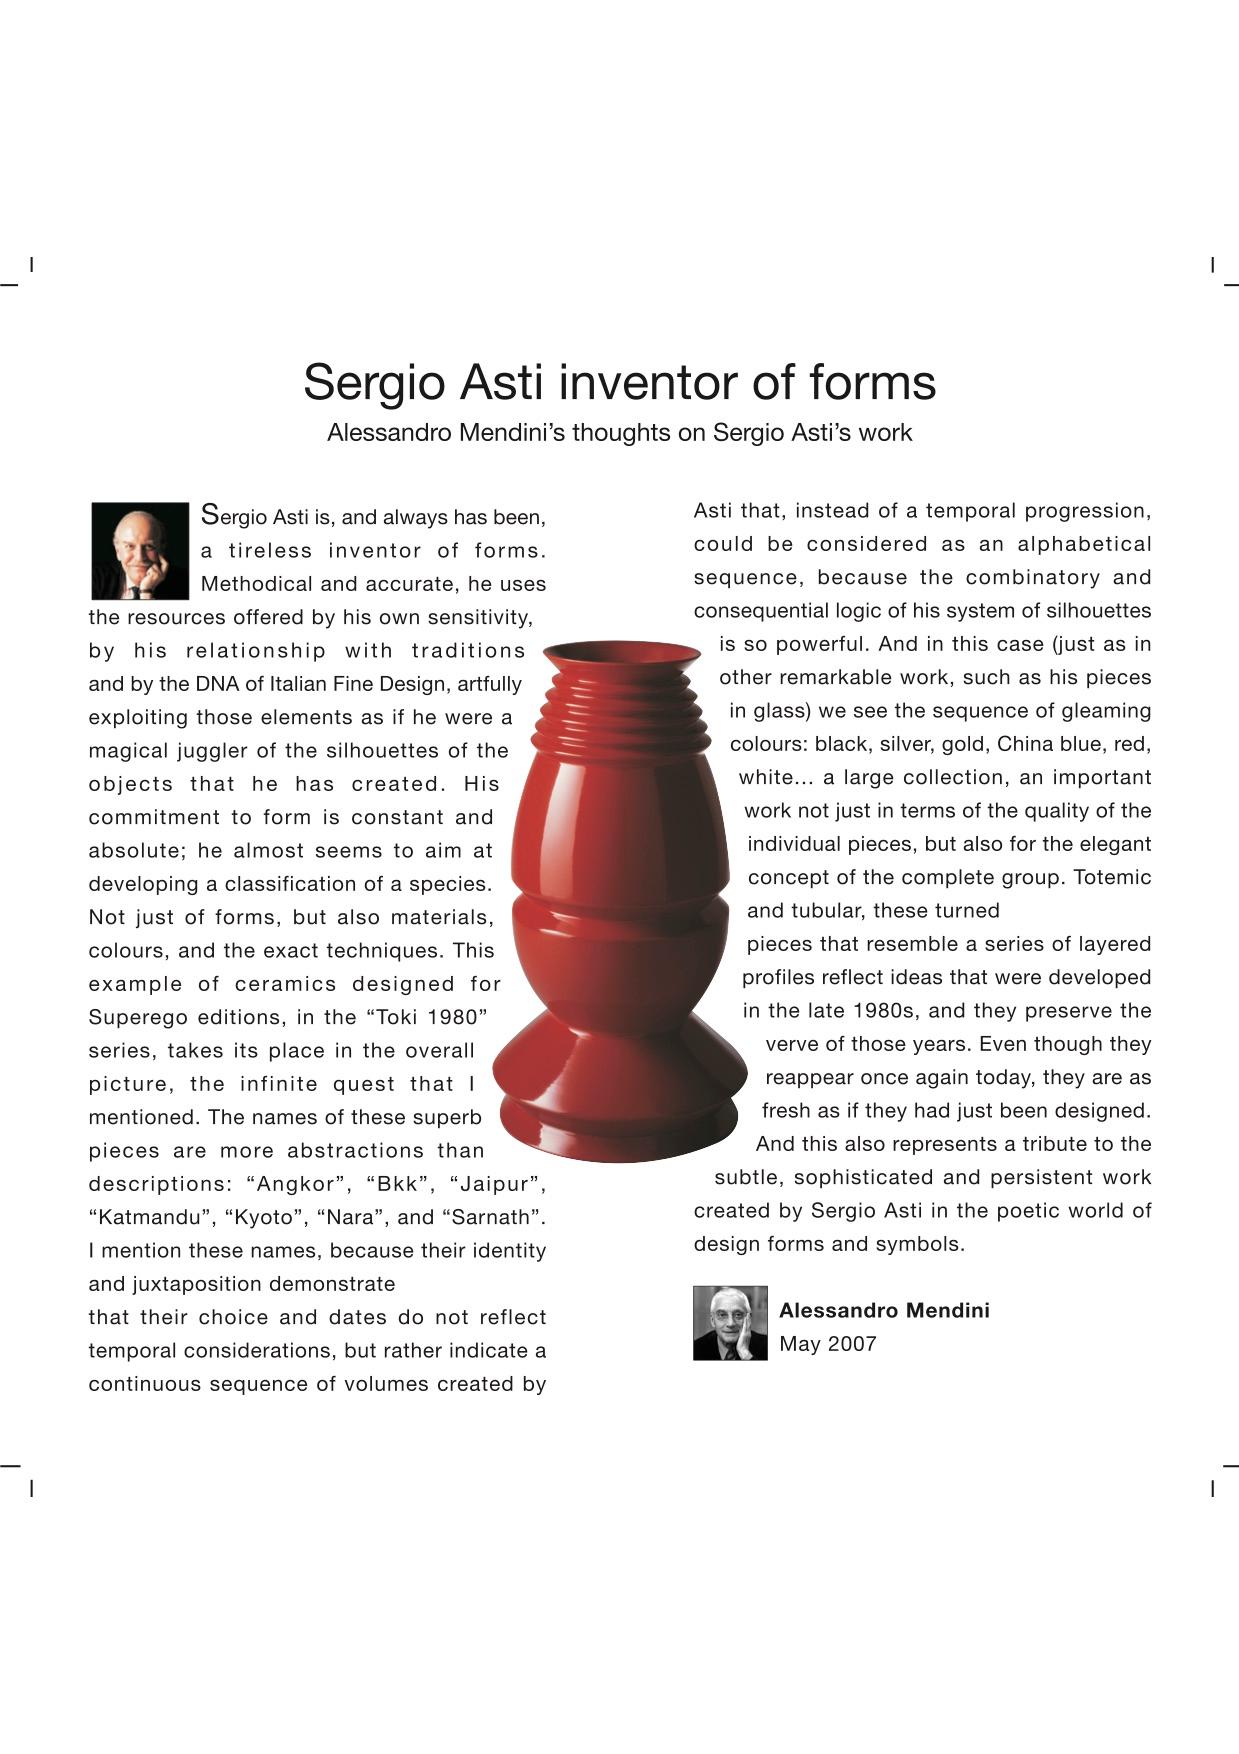 Ceramic Vase Sarnath Model by Sergio Asti for Superego Editions For Sale 1